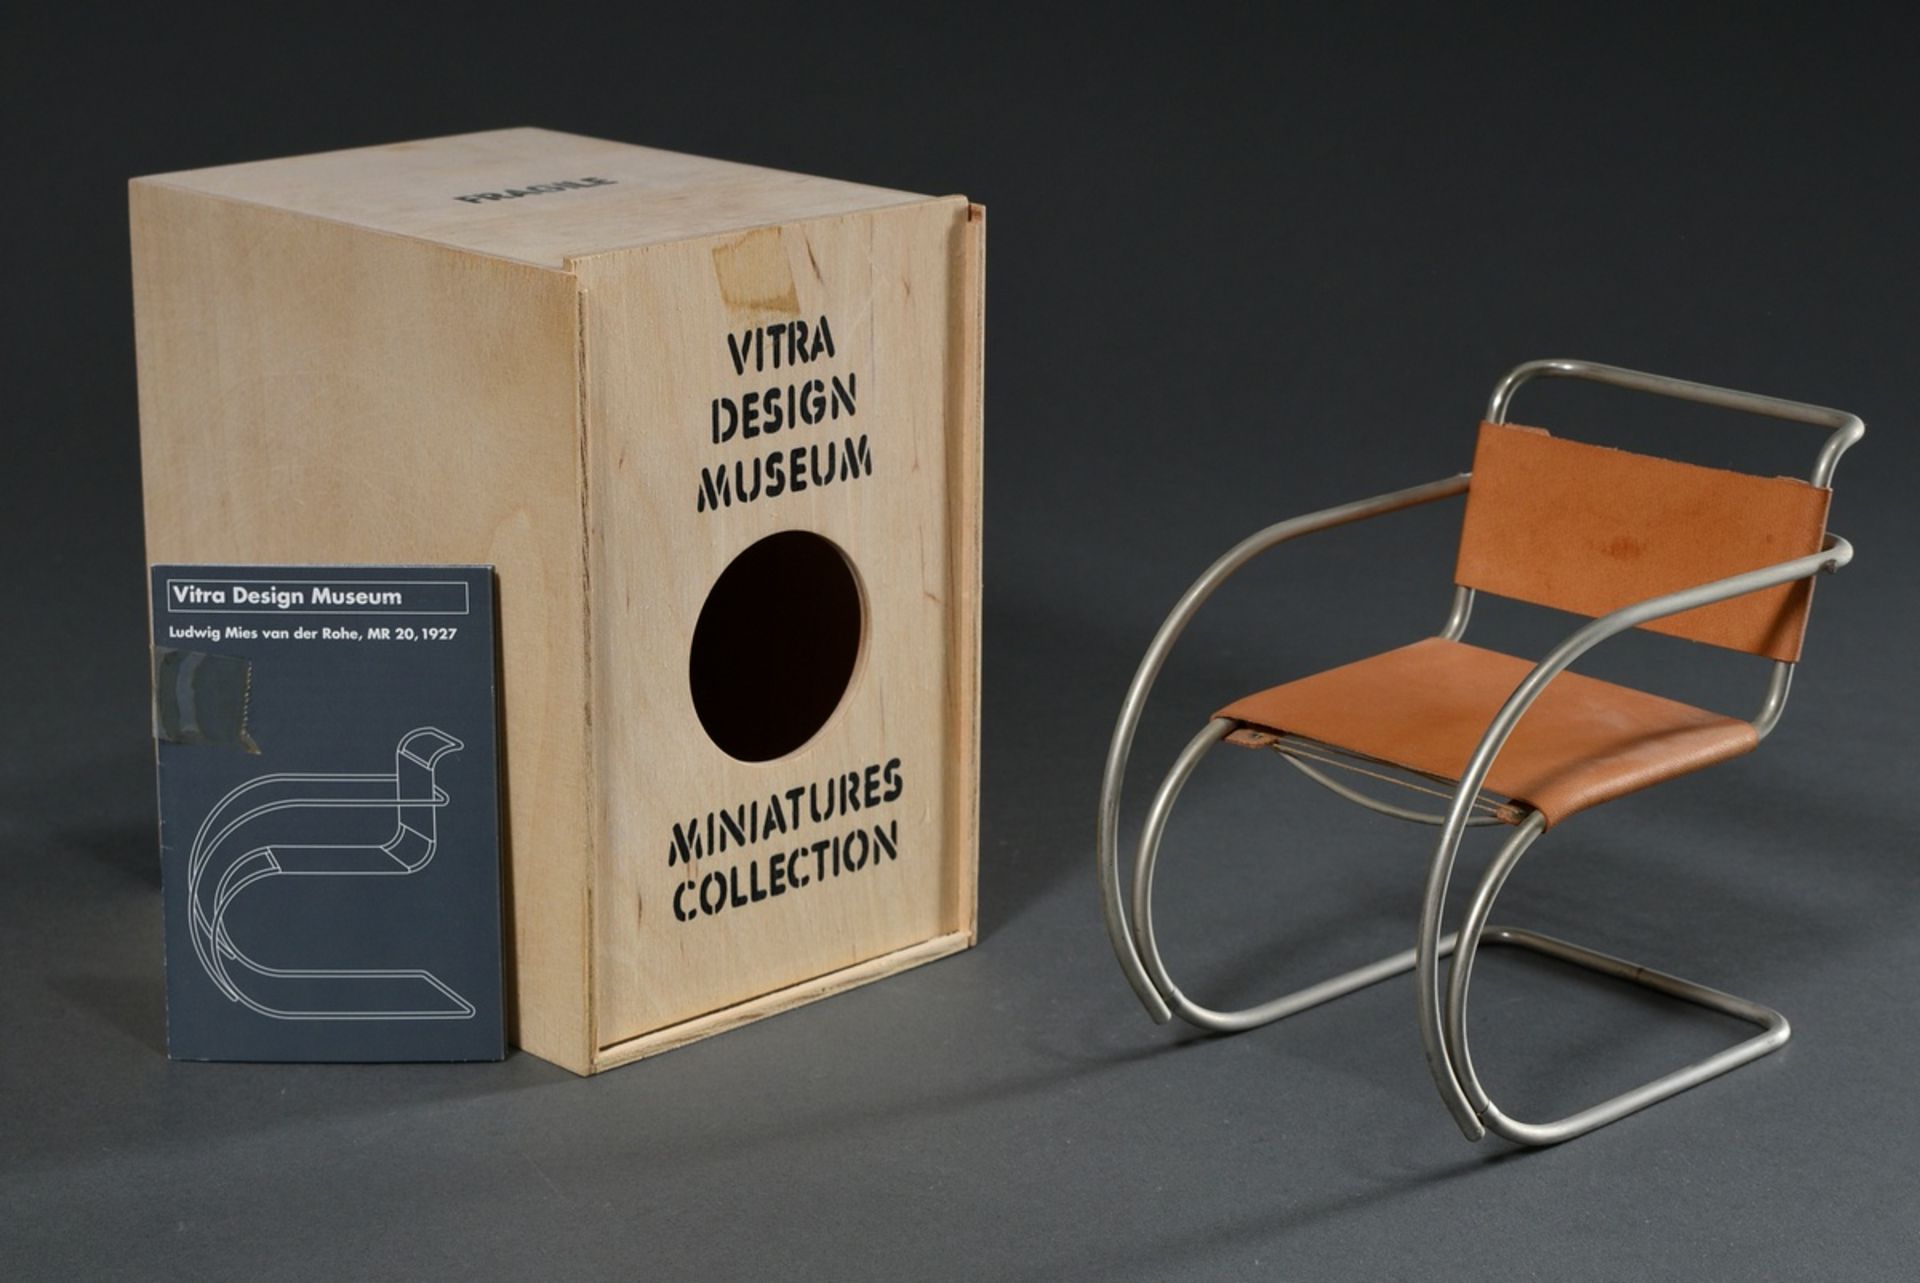 Miniature model chair "MR 20", design: Ludwig Mies van der Rohe 1927, tubular steel nickel plated, 